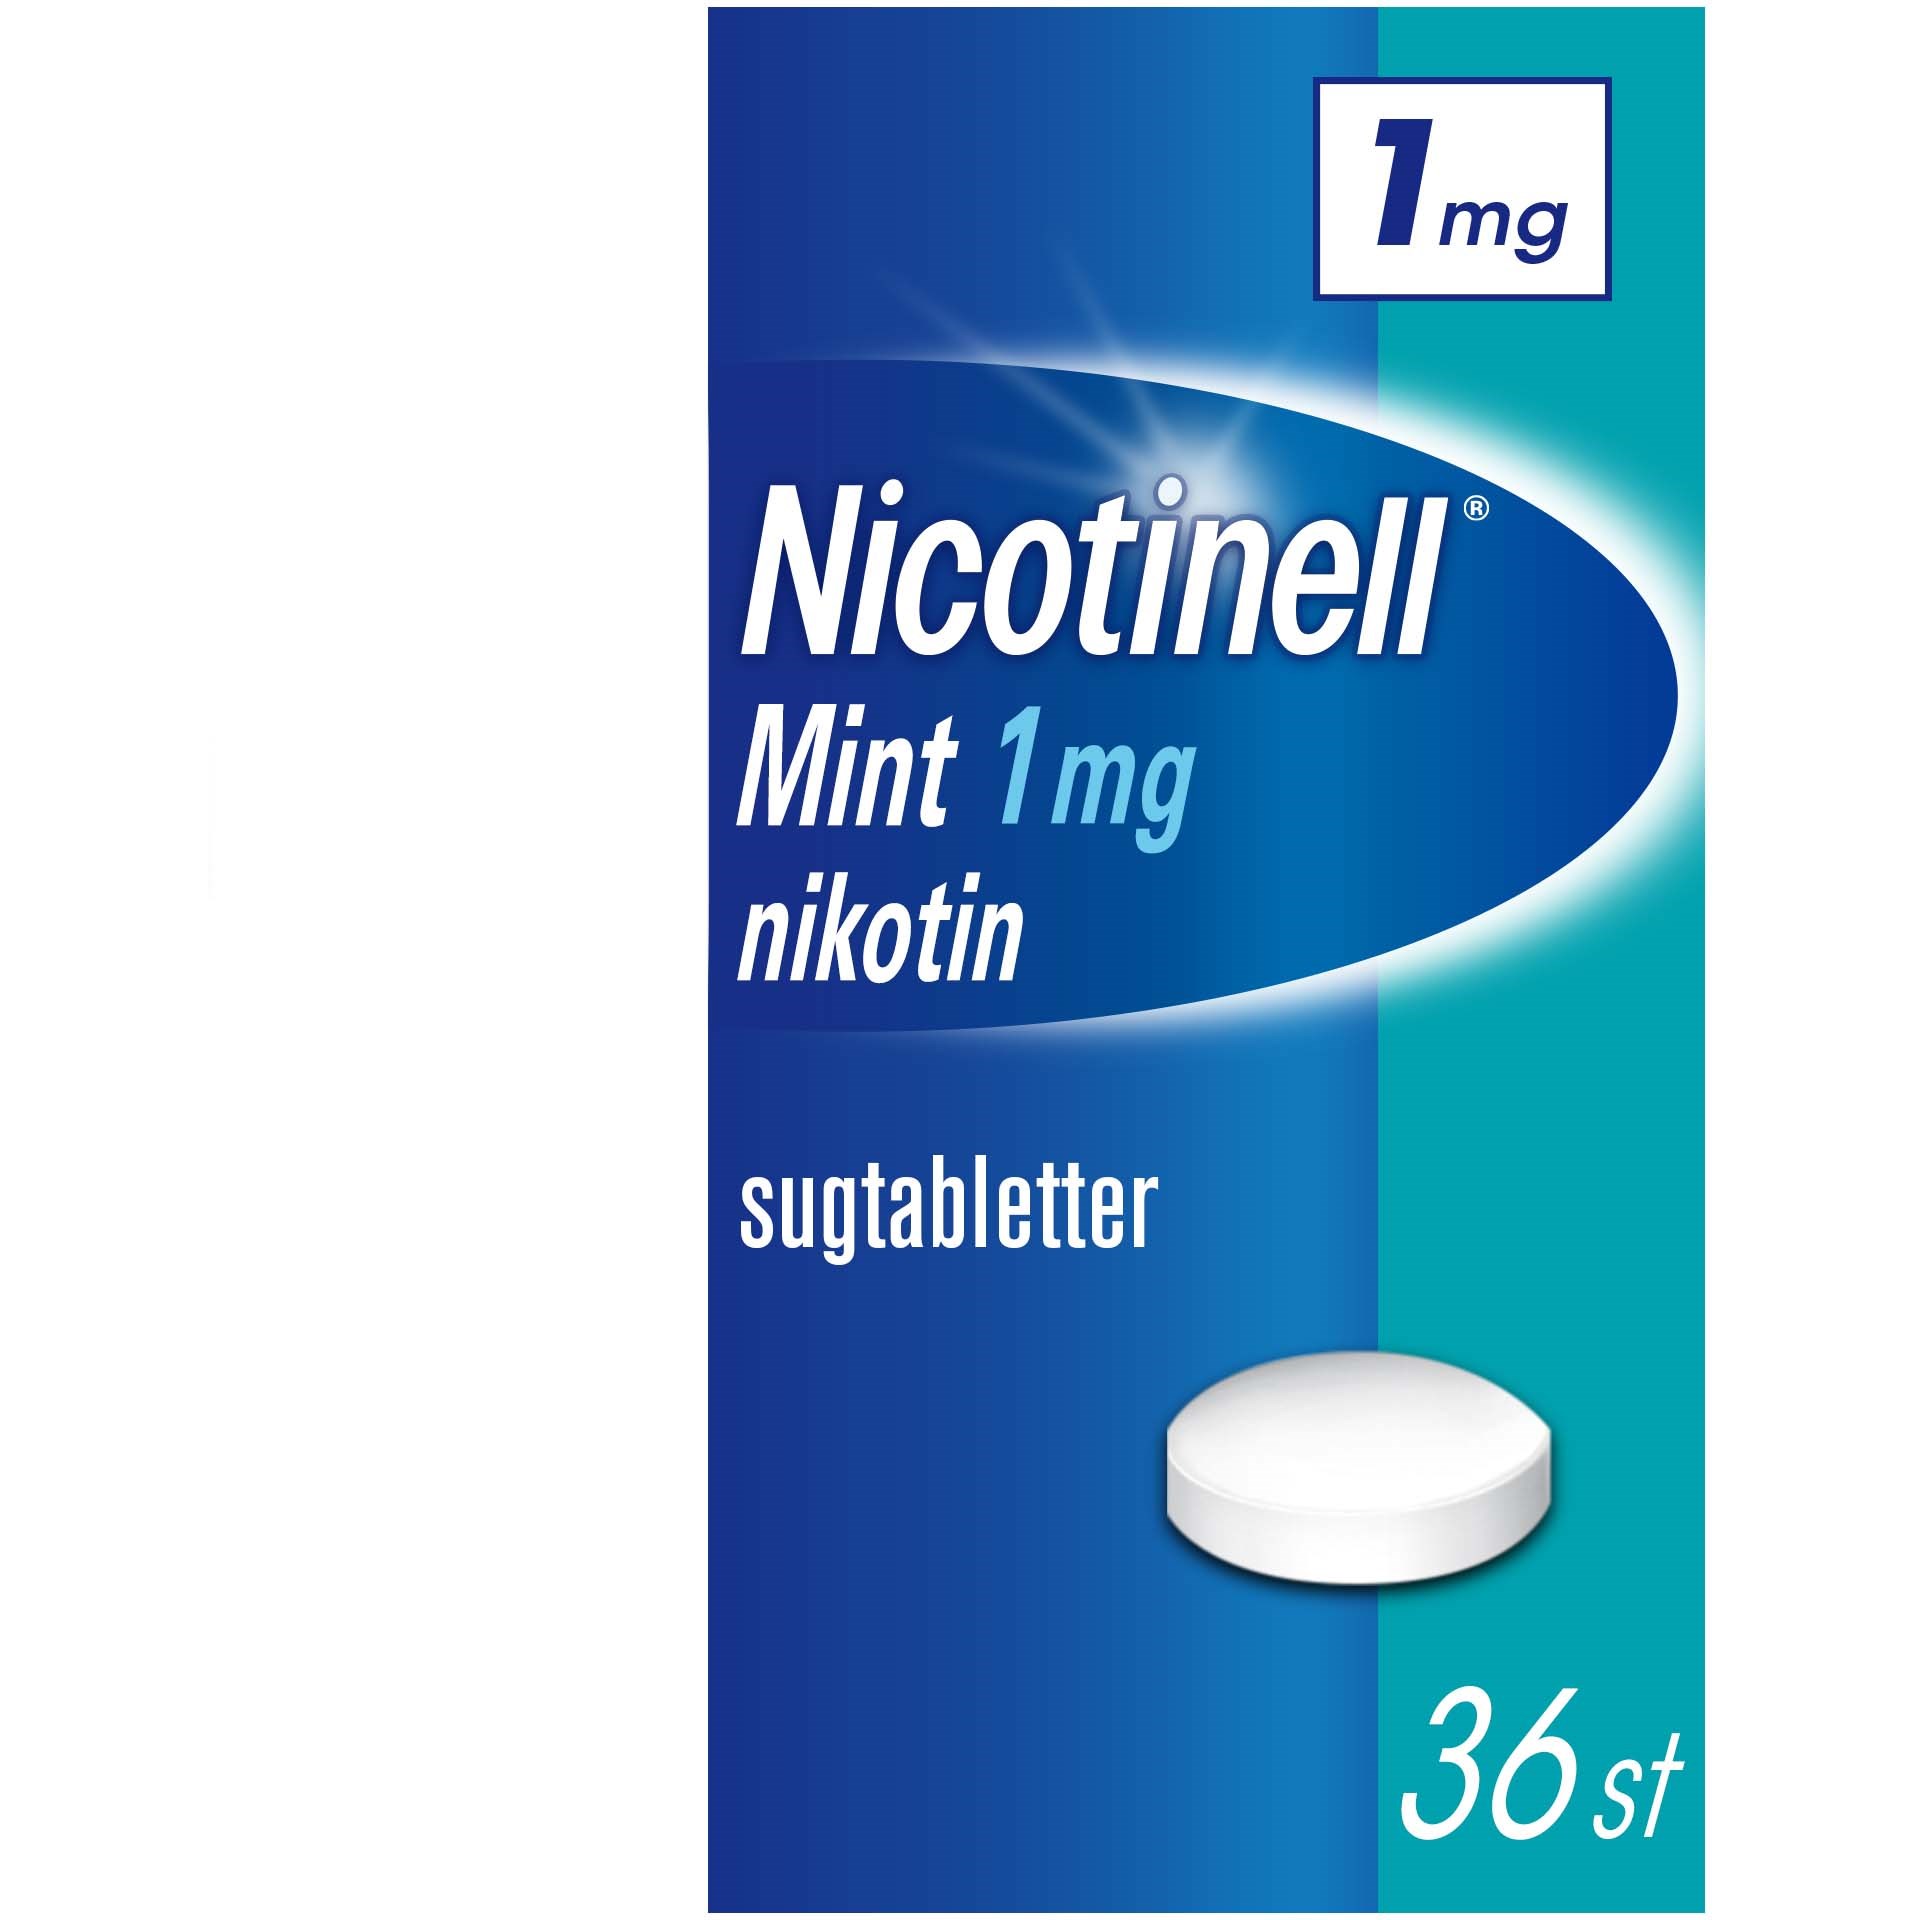 Nicotinell Mint 1 mg Nikotin Sugtabletter 36 st